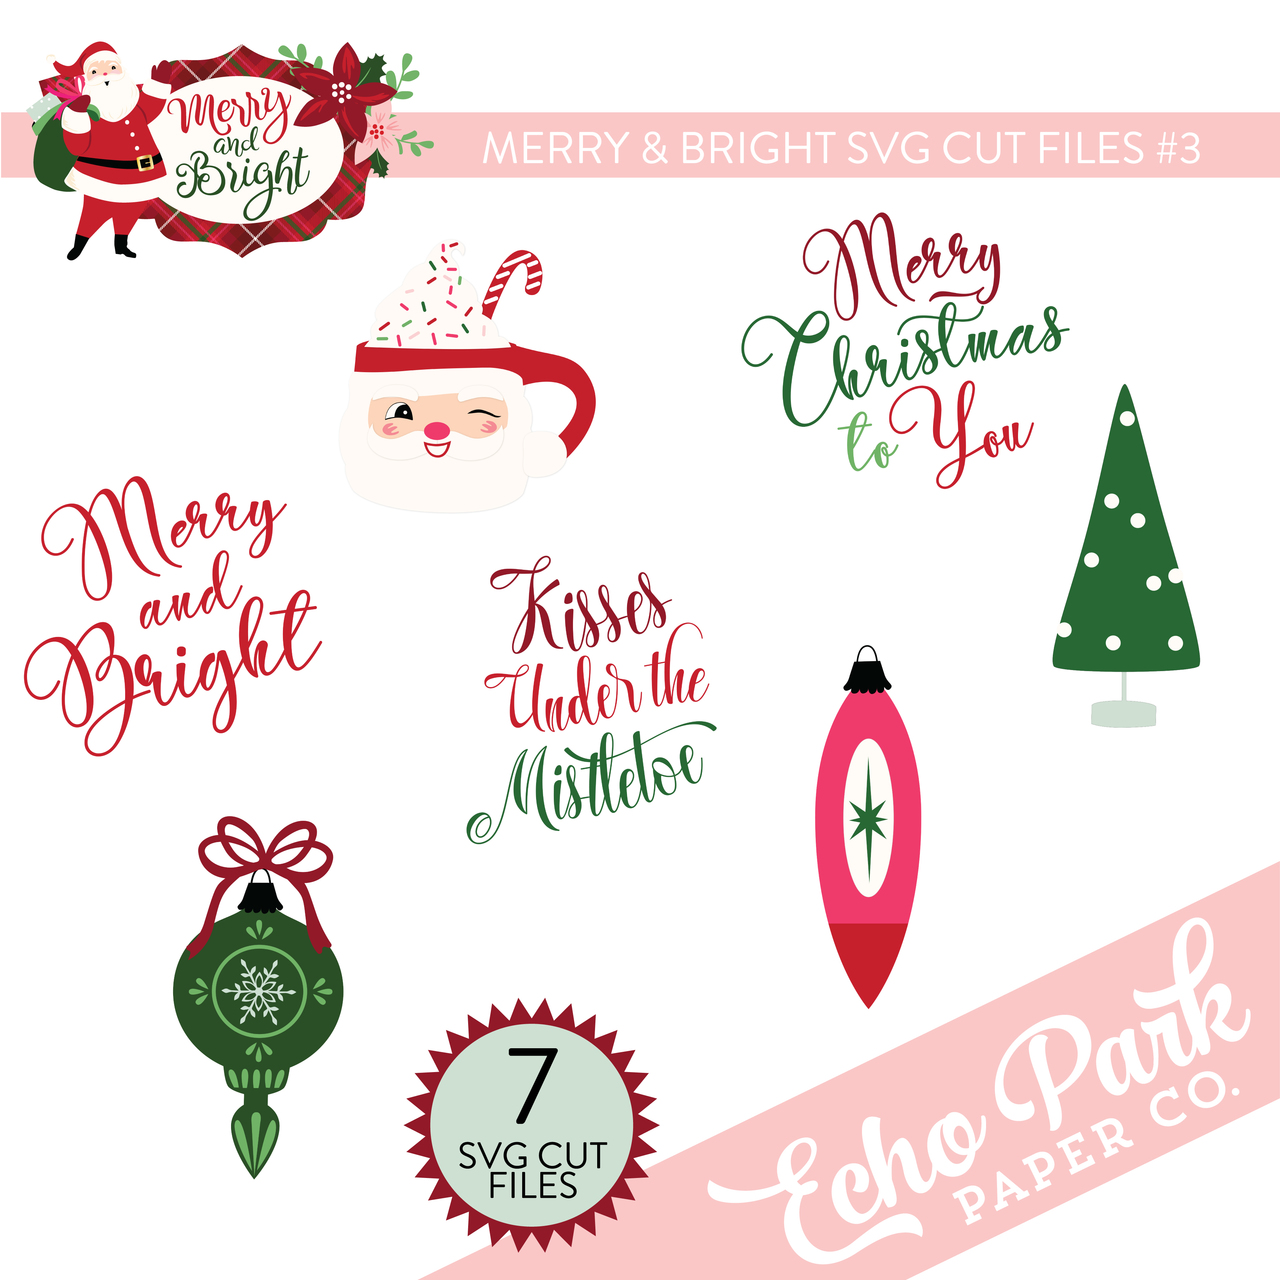 Merry & Bright SVG Cut Files #3